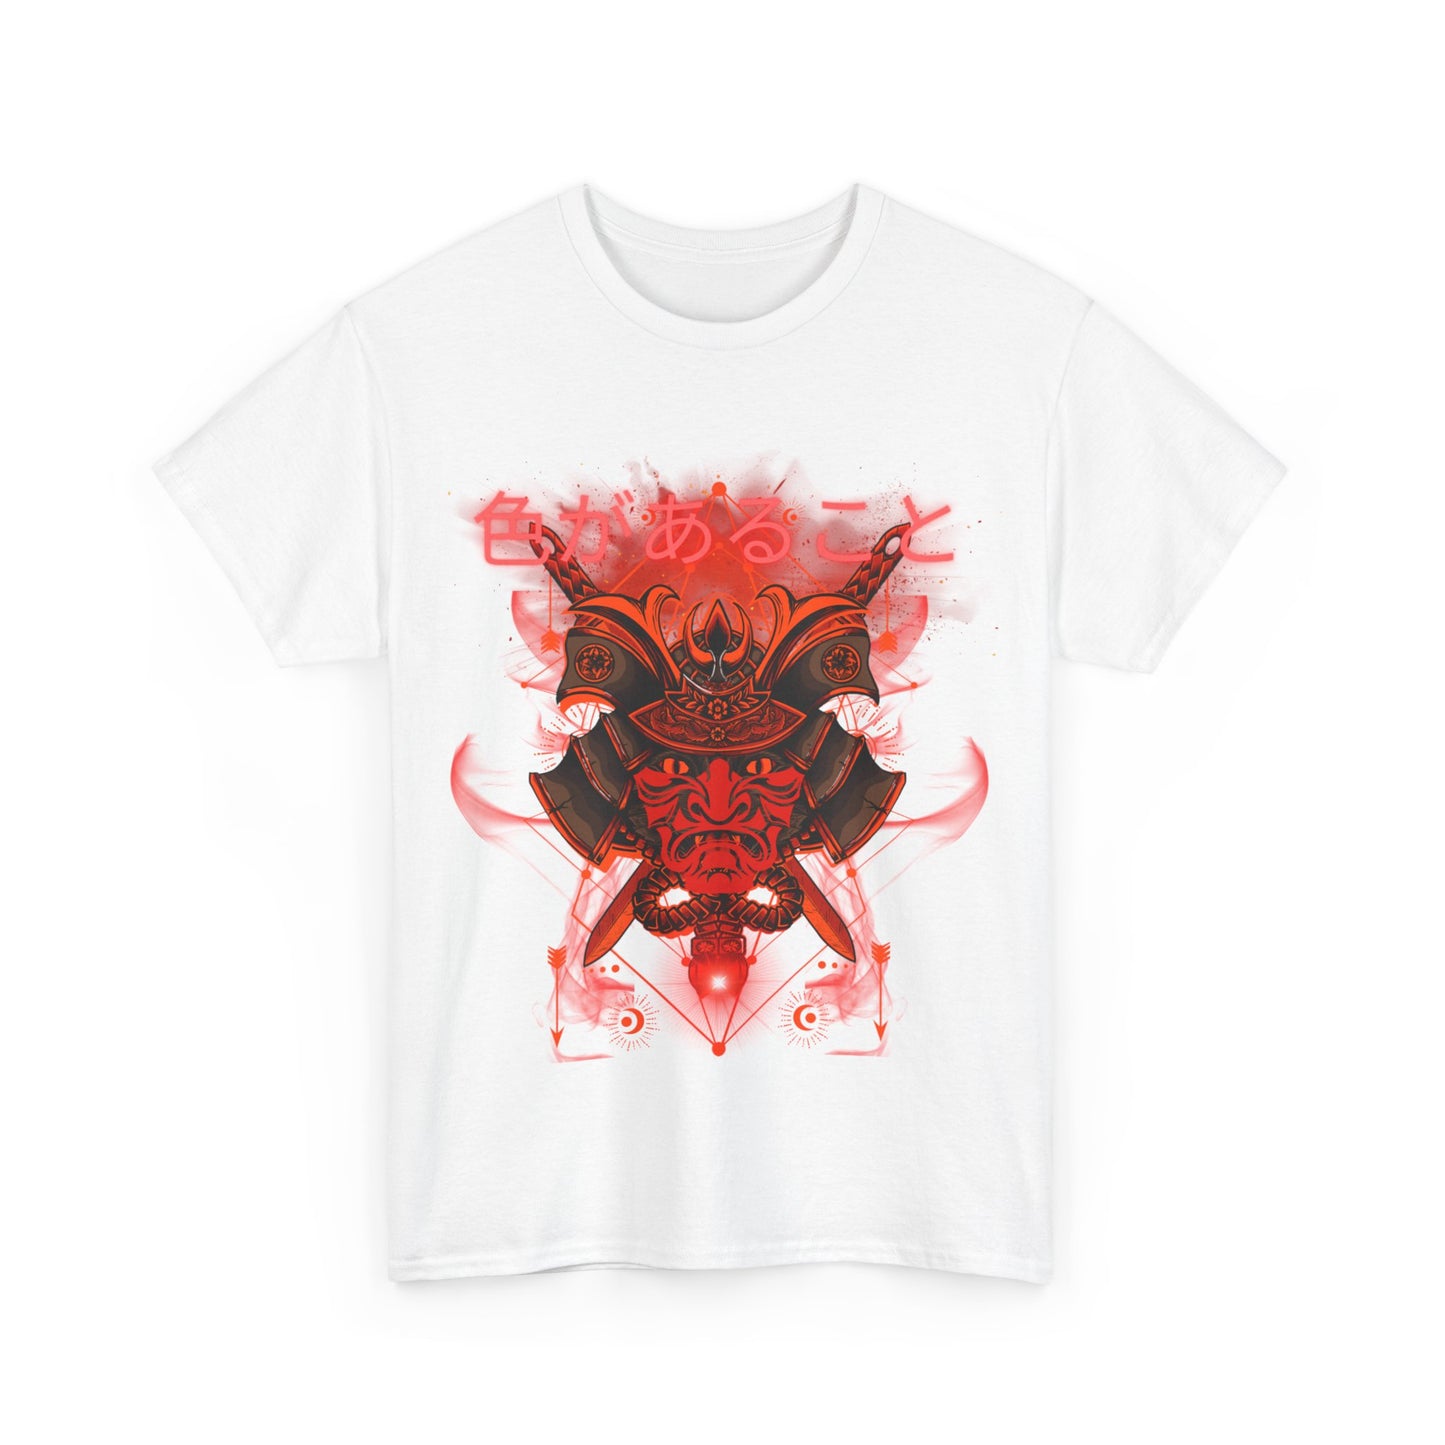 Samurai T-Shirt, Japanese Tee 100% Cotton, 4 Colours, AUS - USA warehouse, free post.